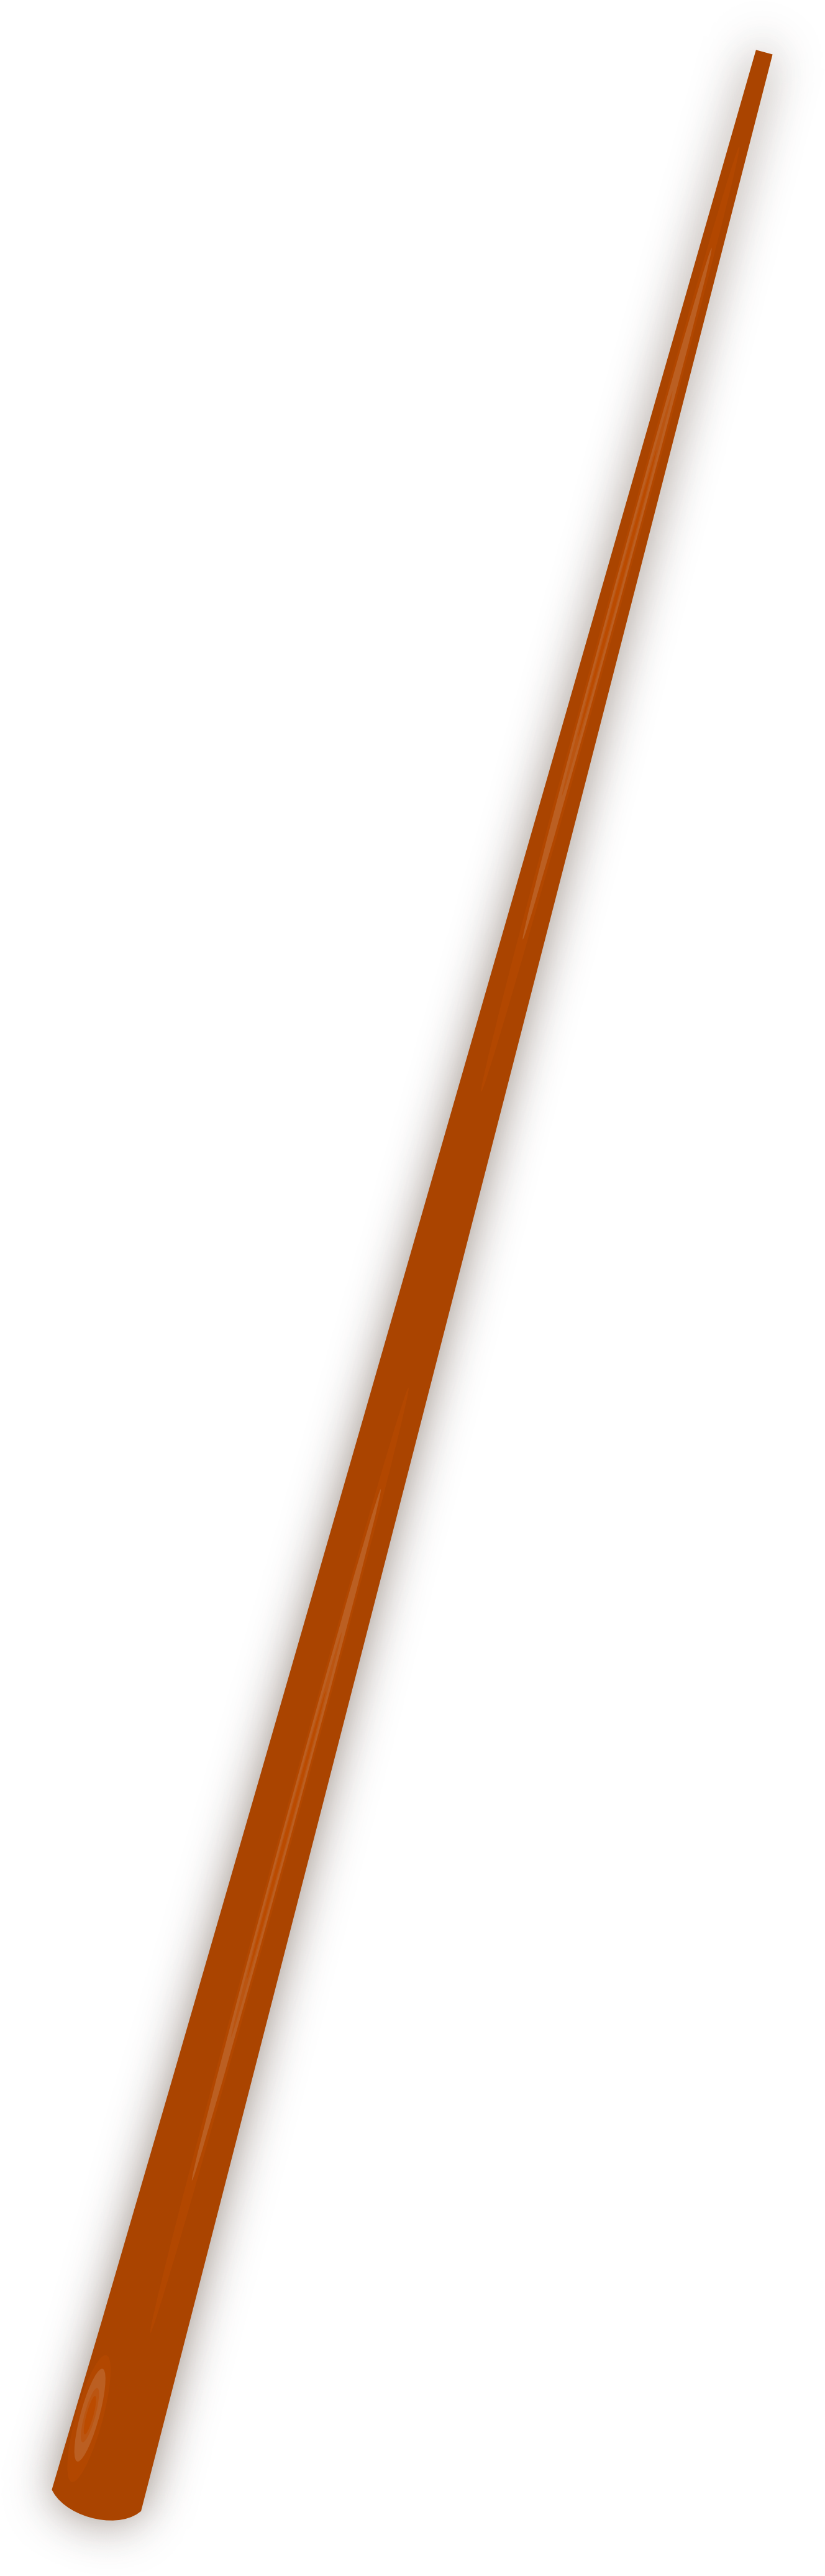 Stick 20clipart - Pointer Stick For Presentations (1331x4160)